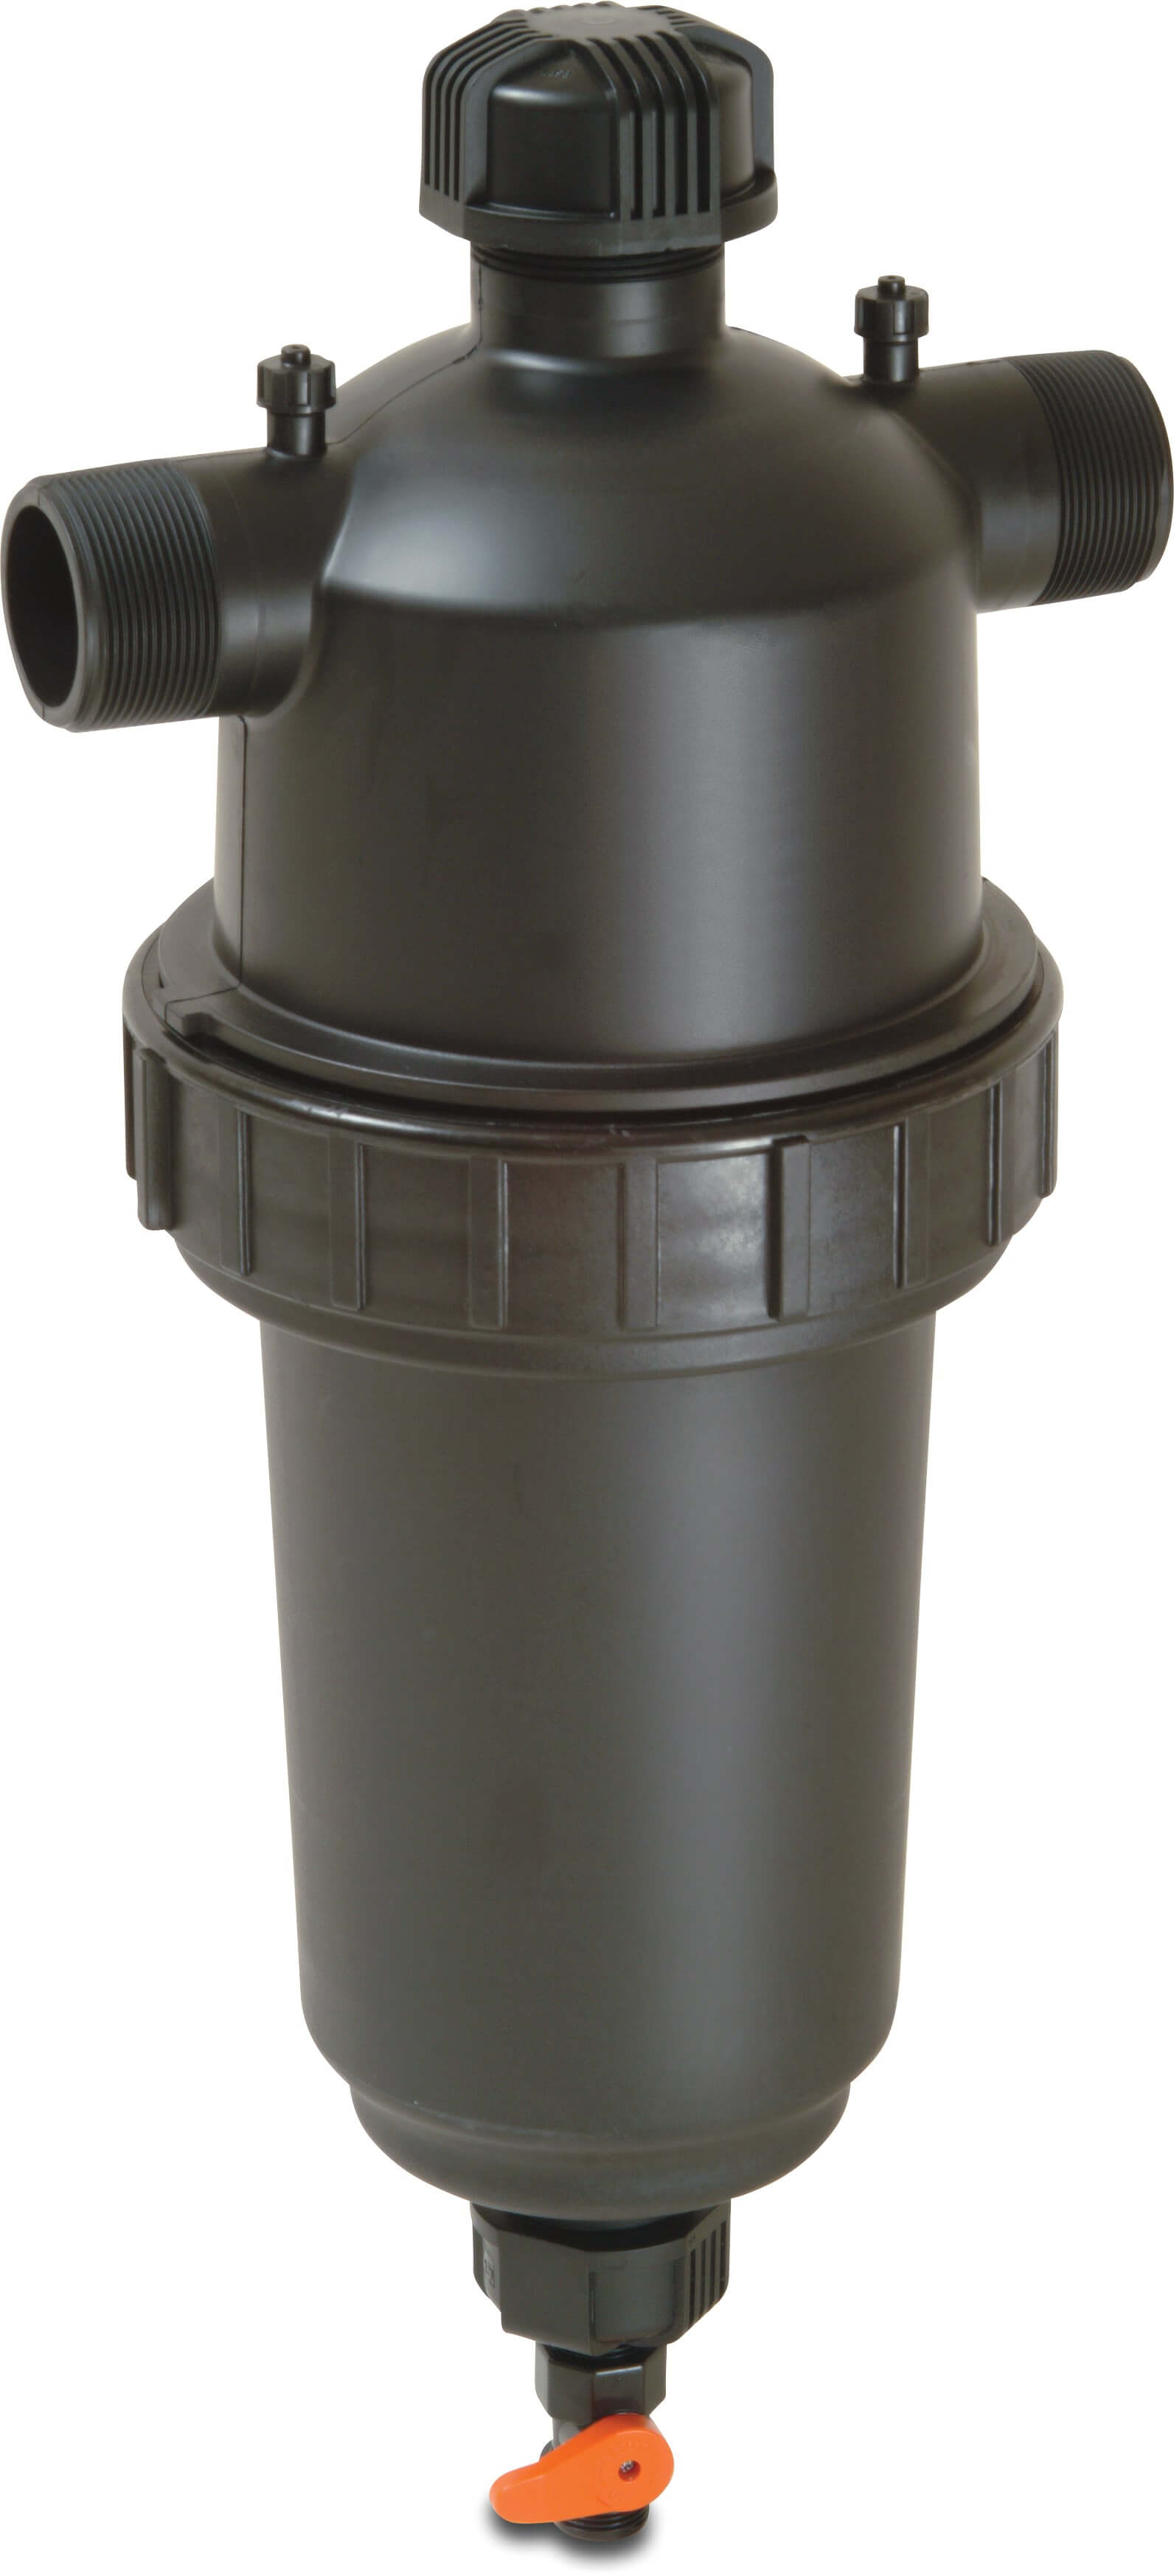 Amiad Handmatige filter PA 2" buitendraad 10bar 130micron RVS 316 rood type T-Super